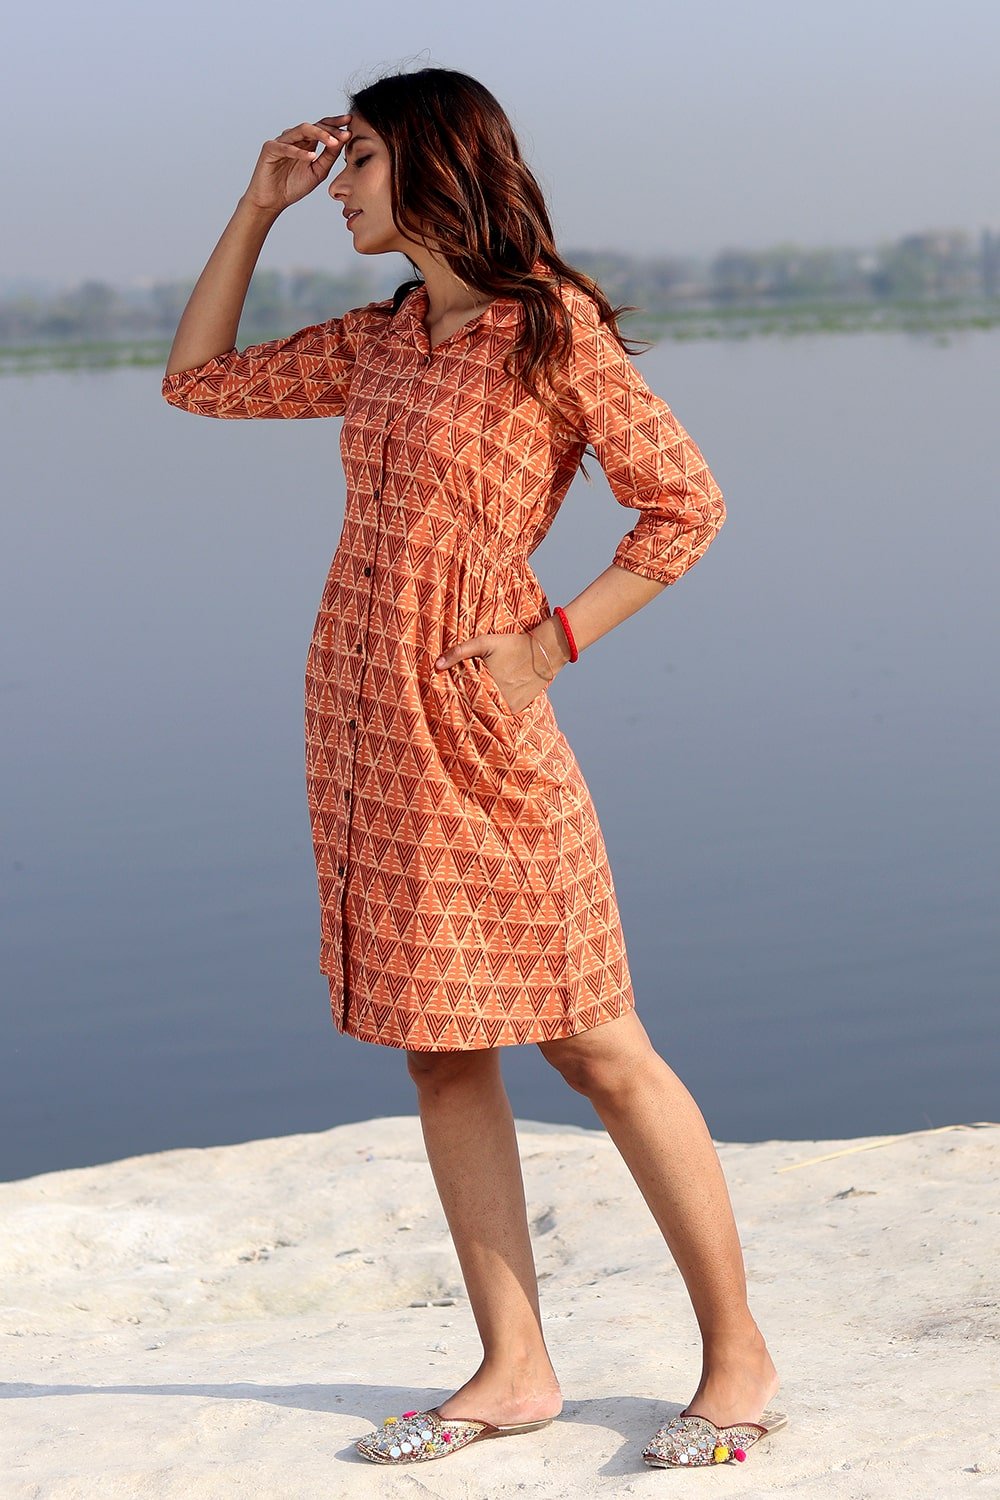 SootiSyahi 'Geometrical Weave' Cotton Dress - SootiSyahi